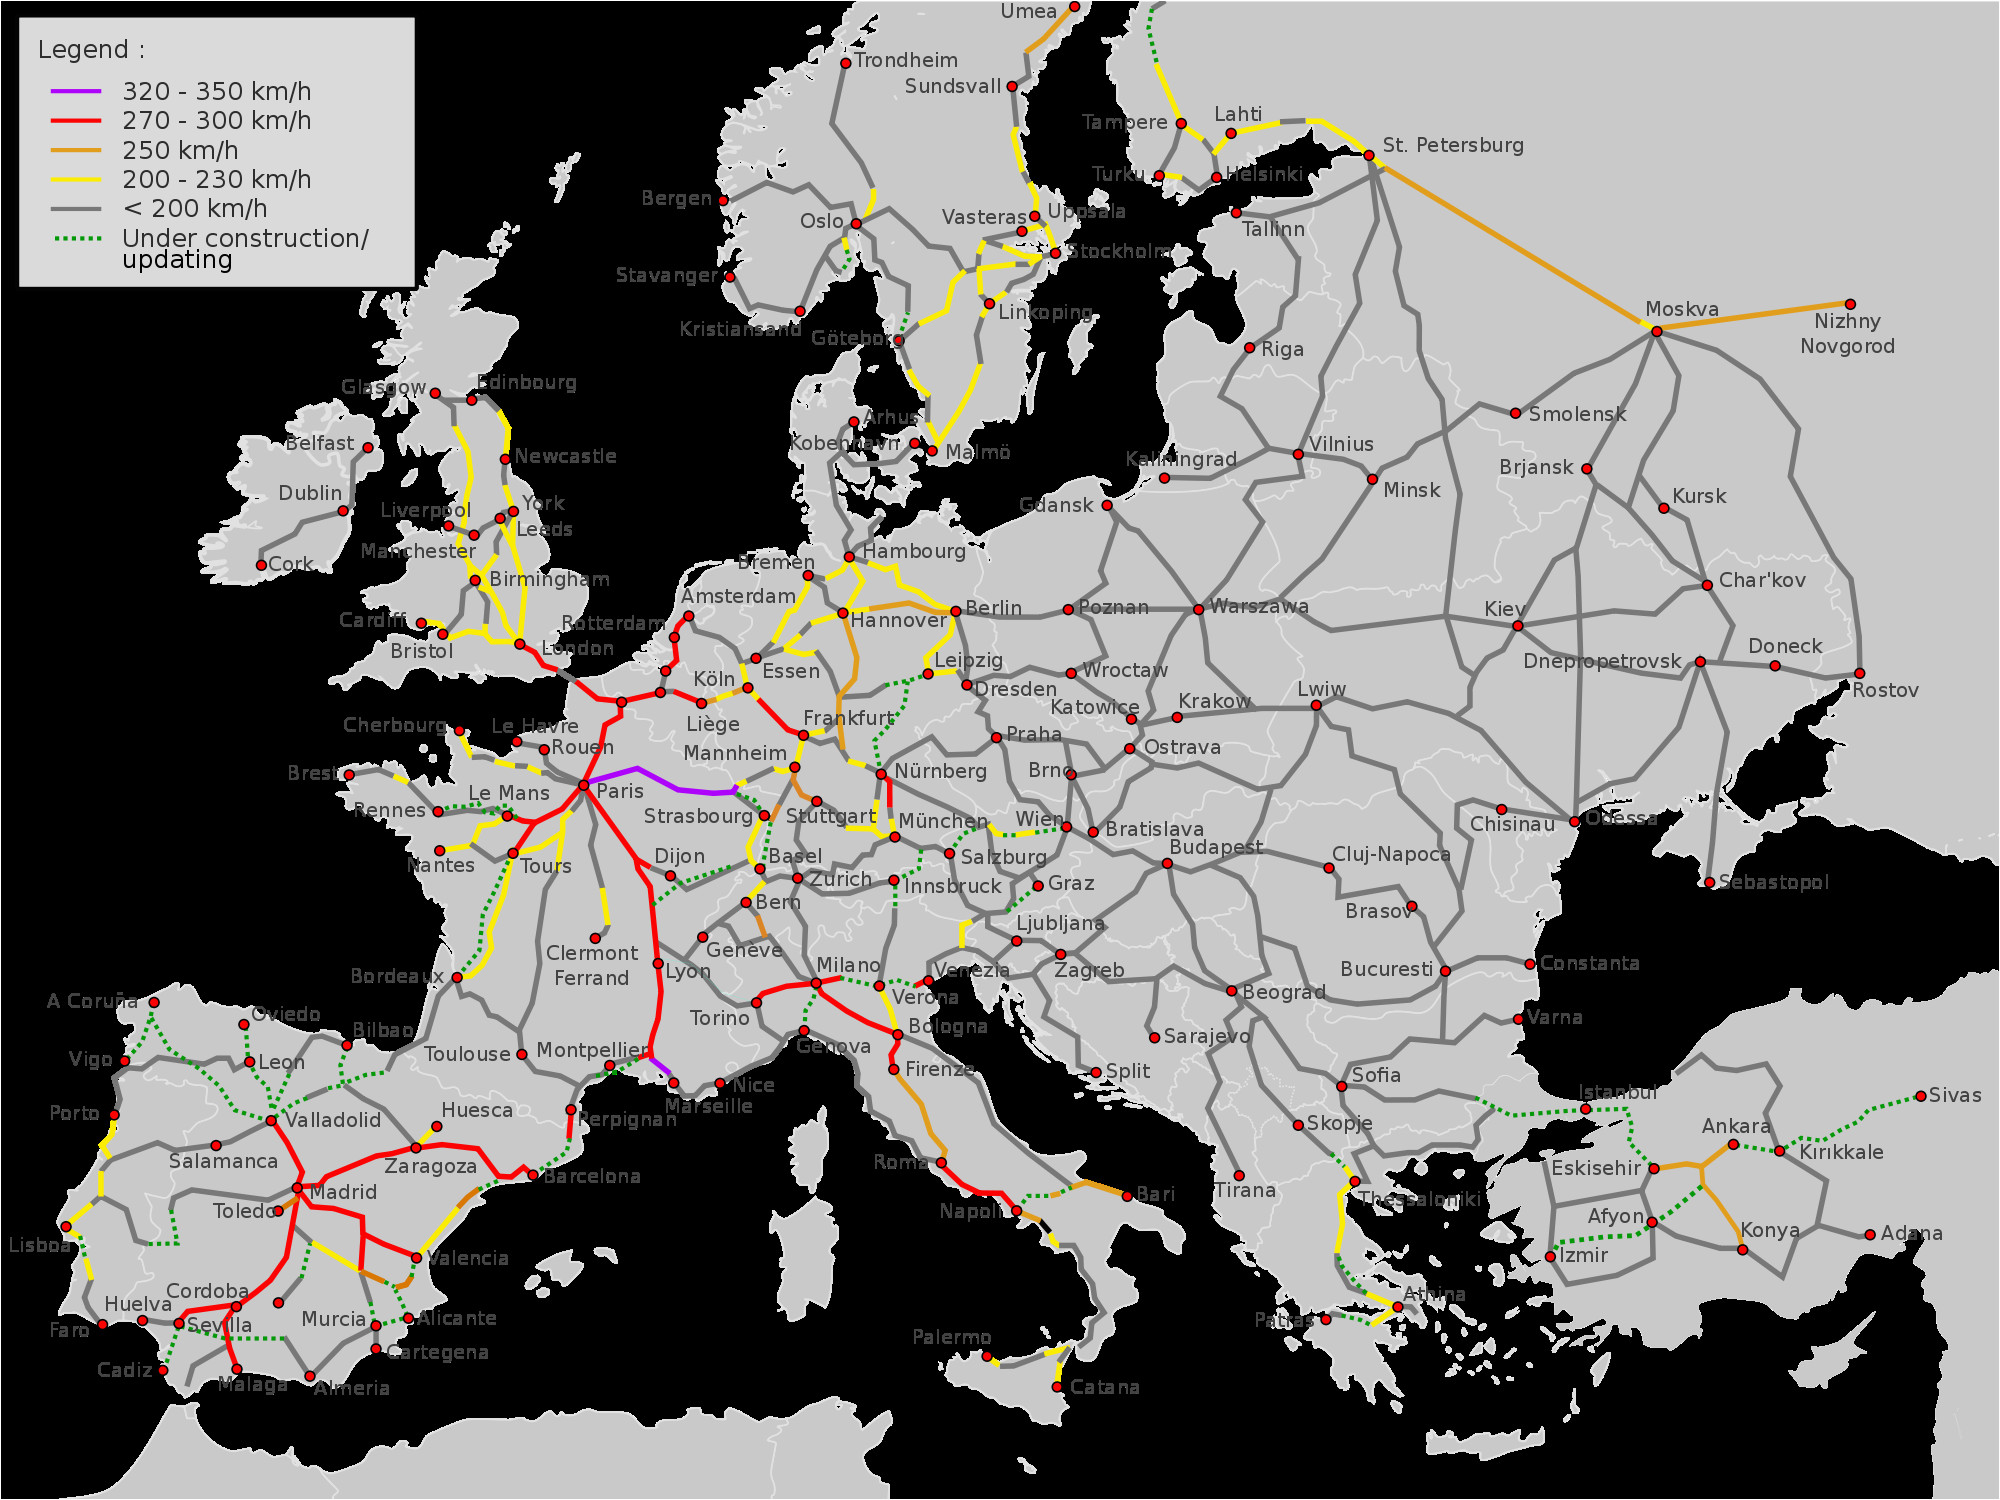 eu hsr network plan infrastructure of china map diagram